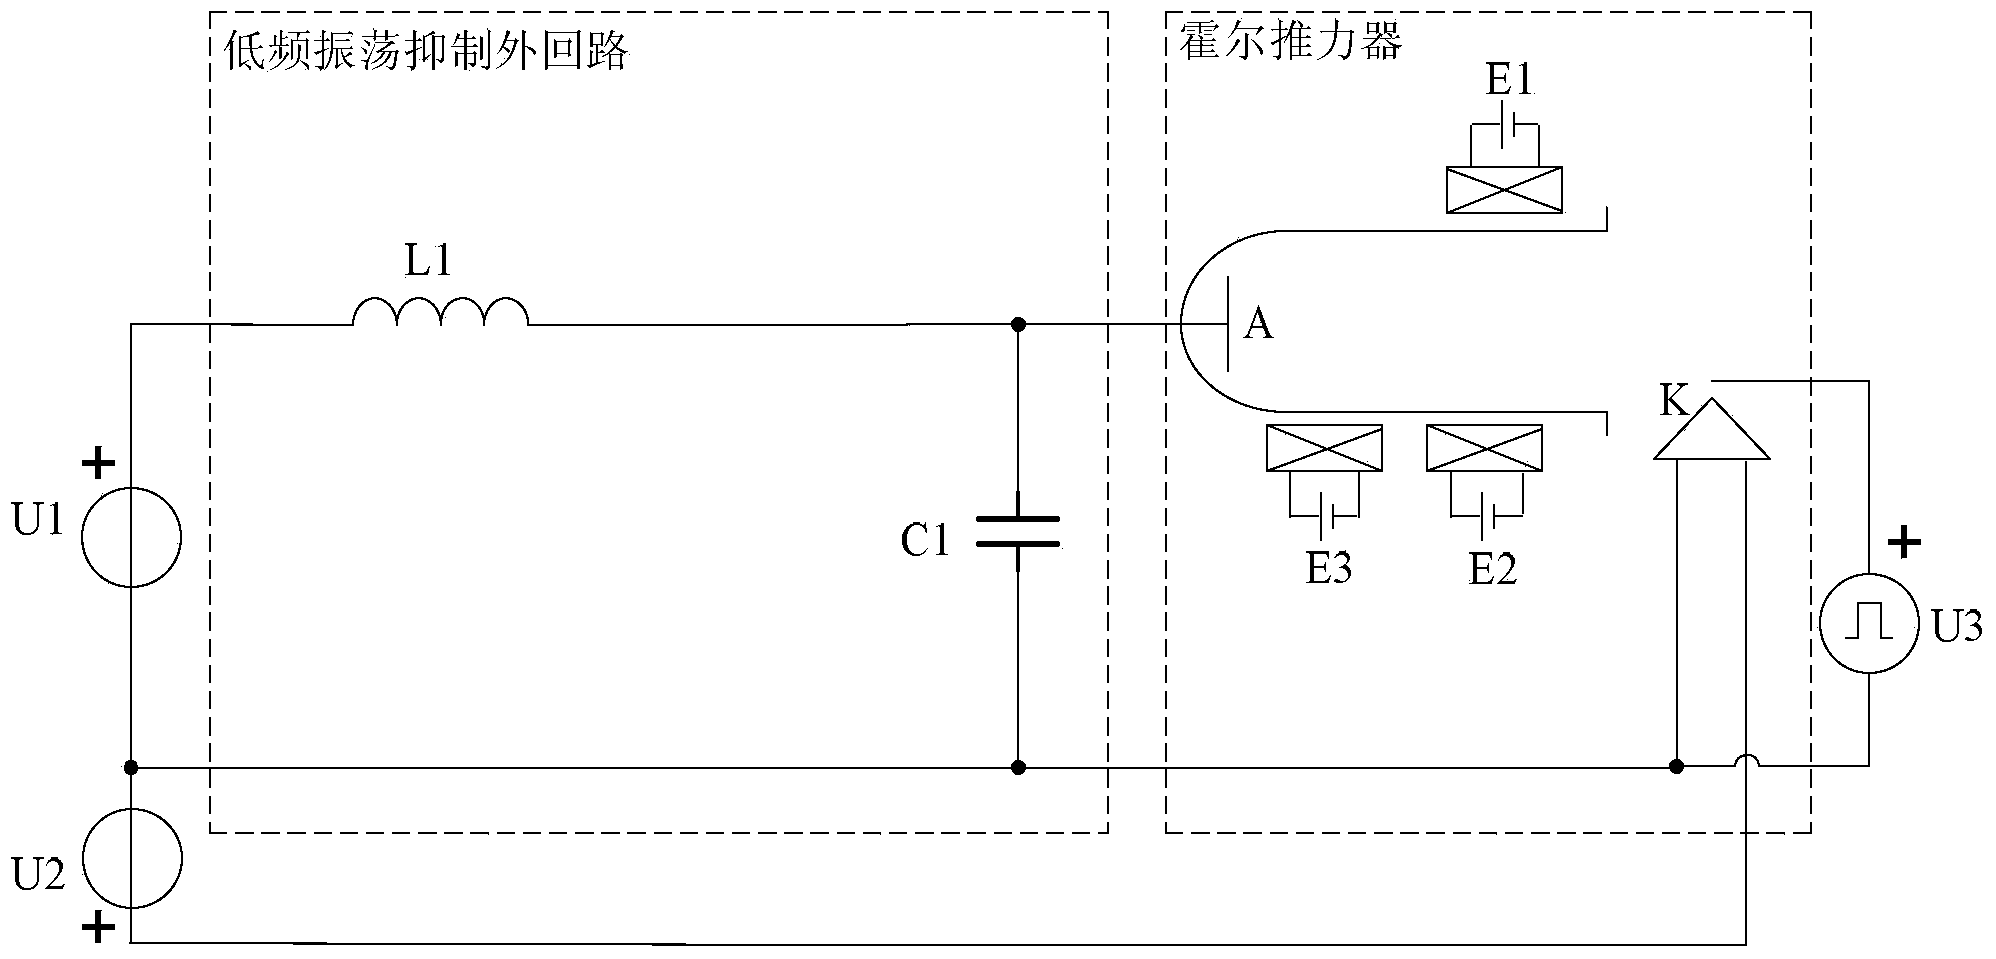 Ignition method of plasma hall thruster